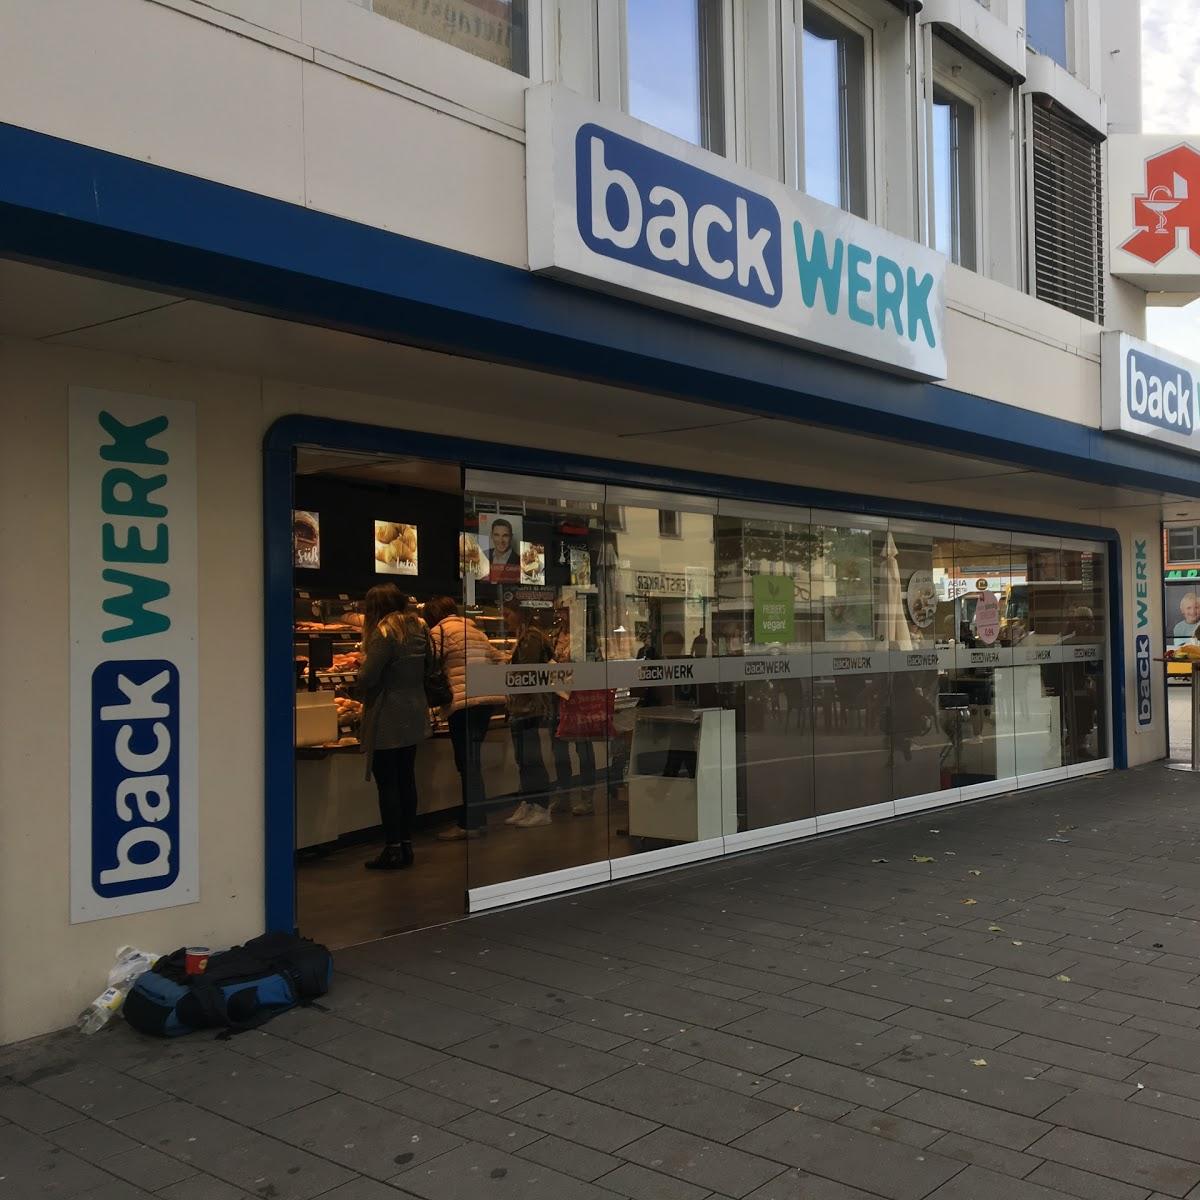 Restaurant "BackWerk" in Siegen